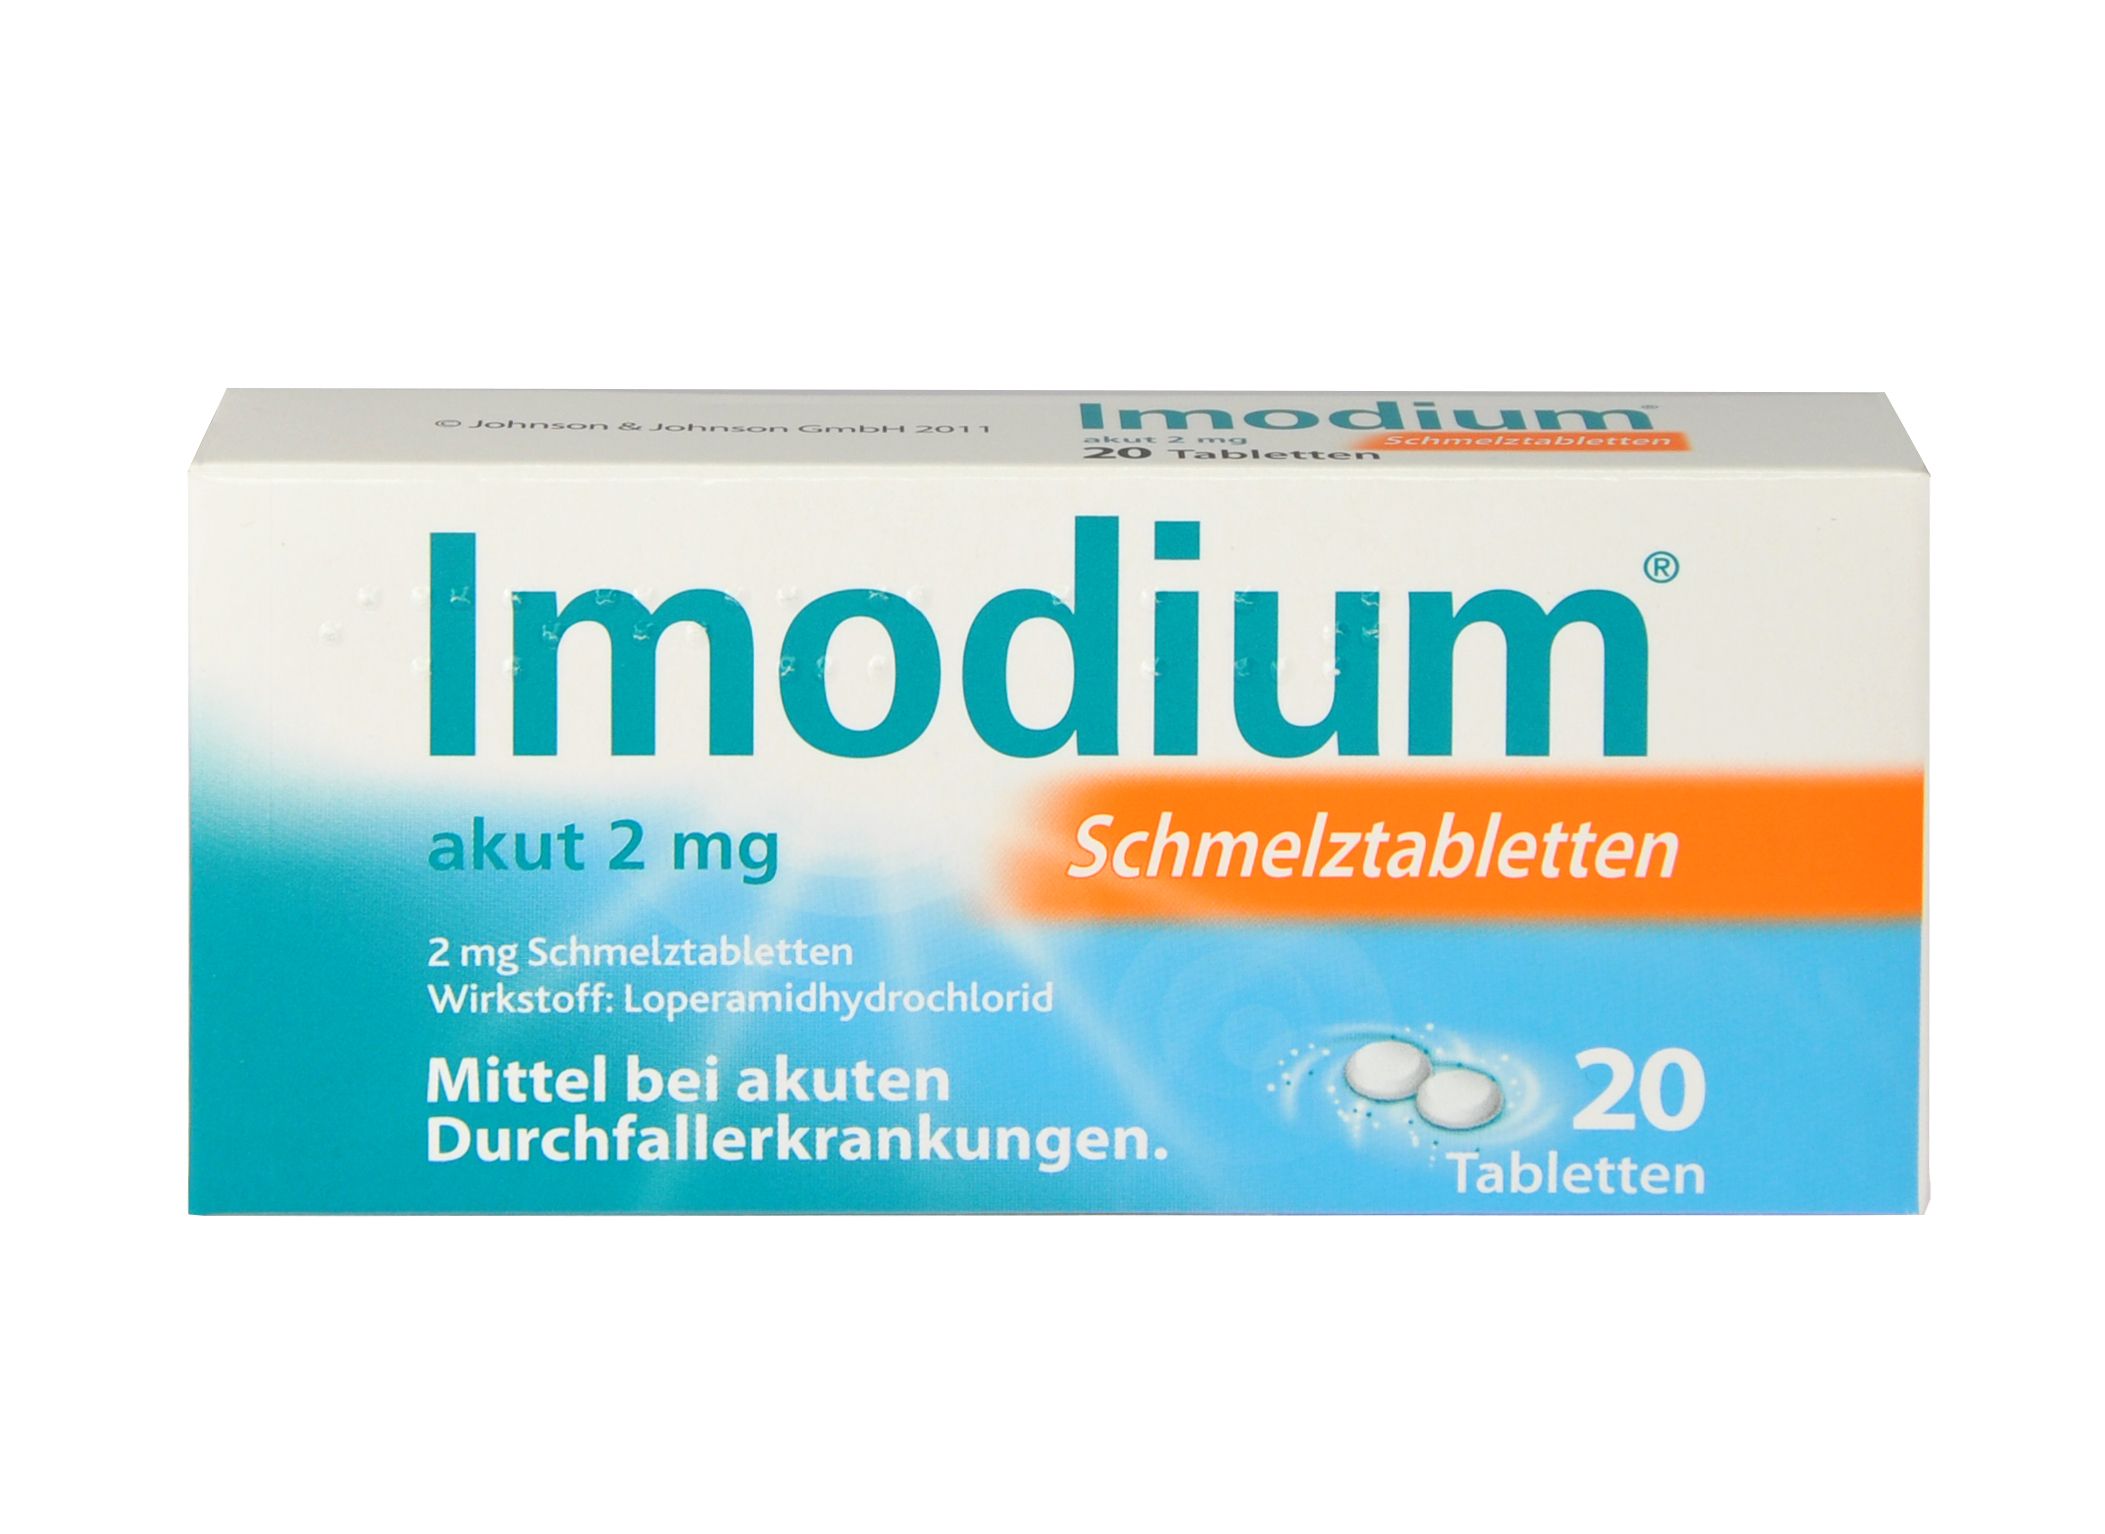 Abbildung Imodium akut  2 mg Schmelztabletten